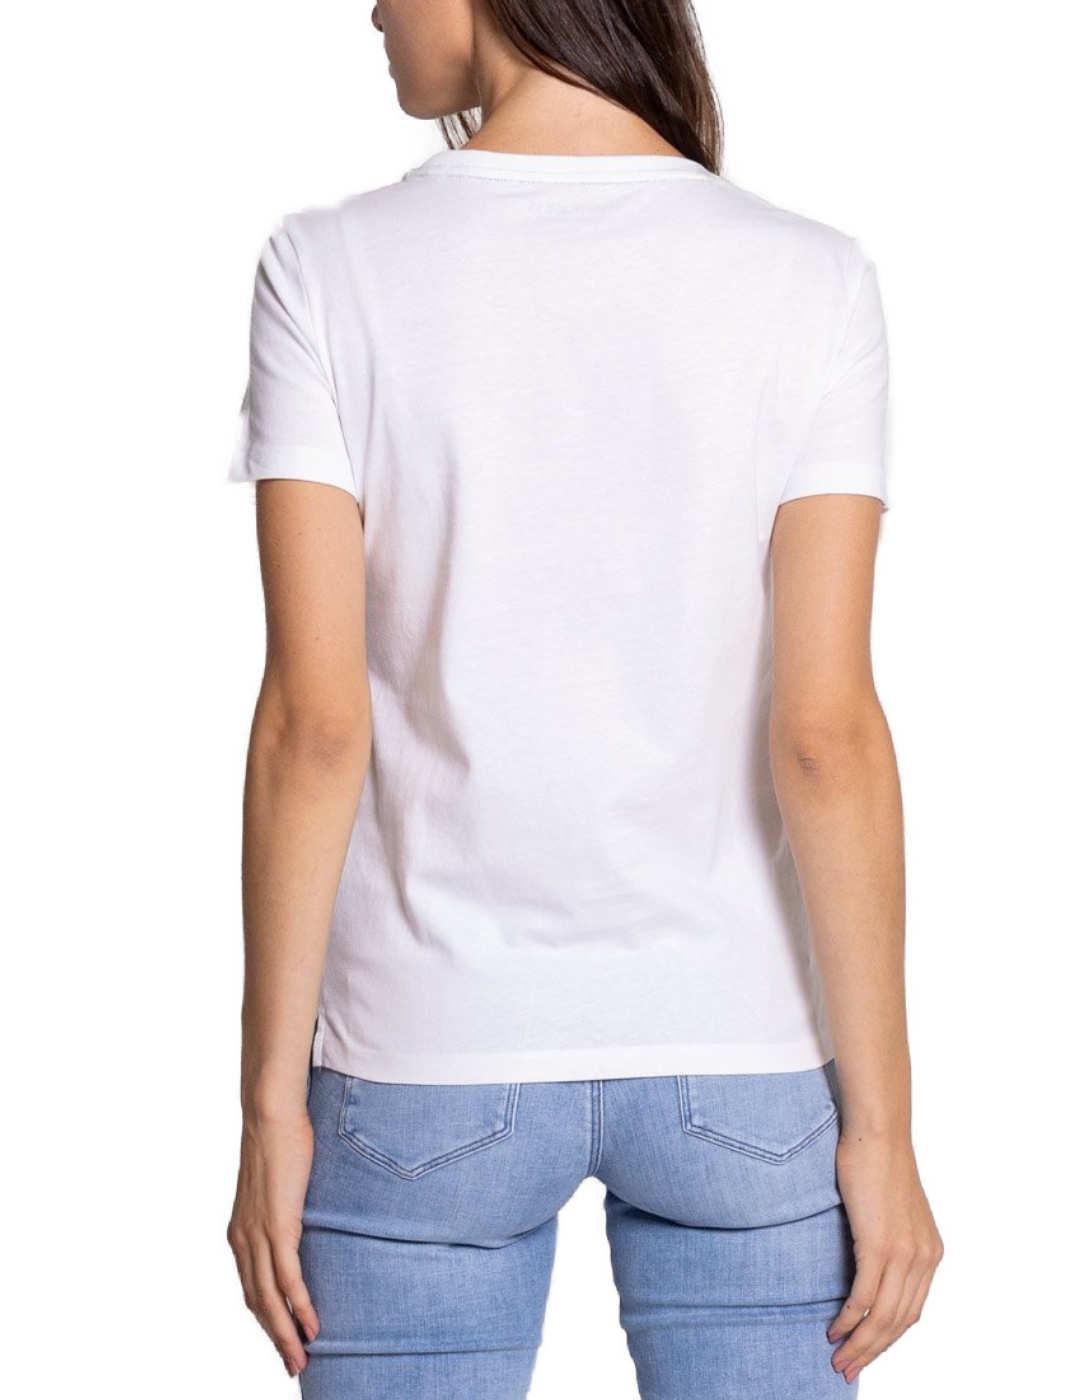 Camiseta Guess original basica blanco para mujer-z